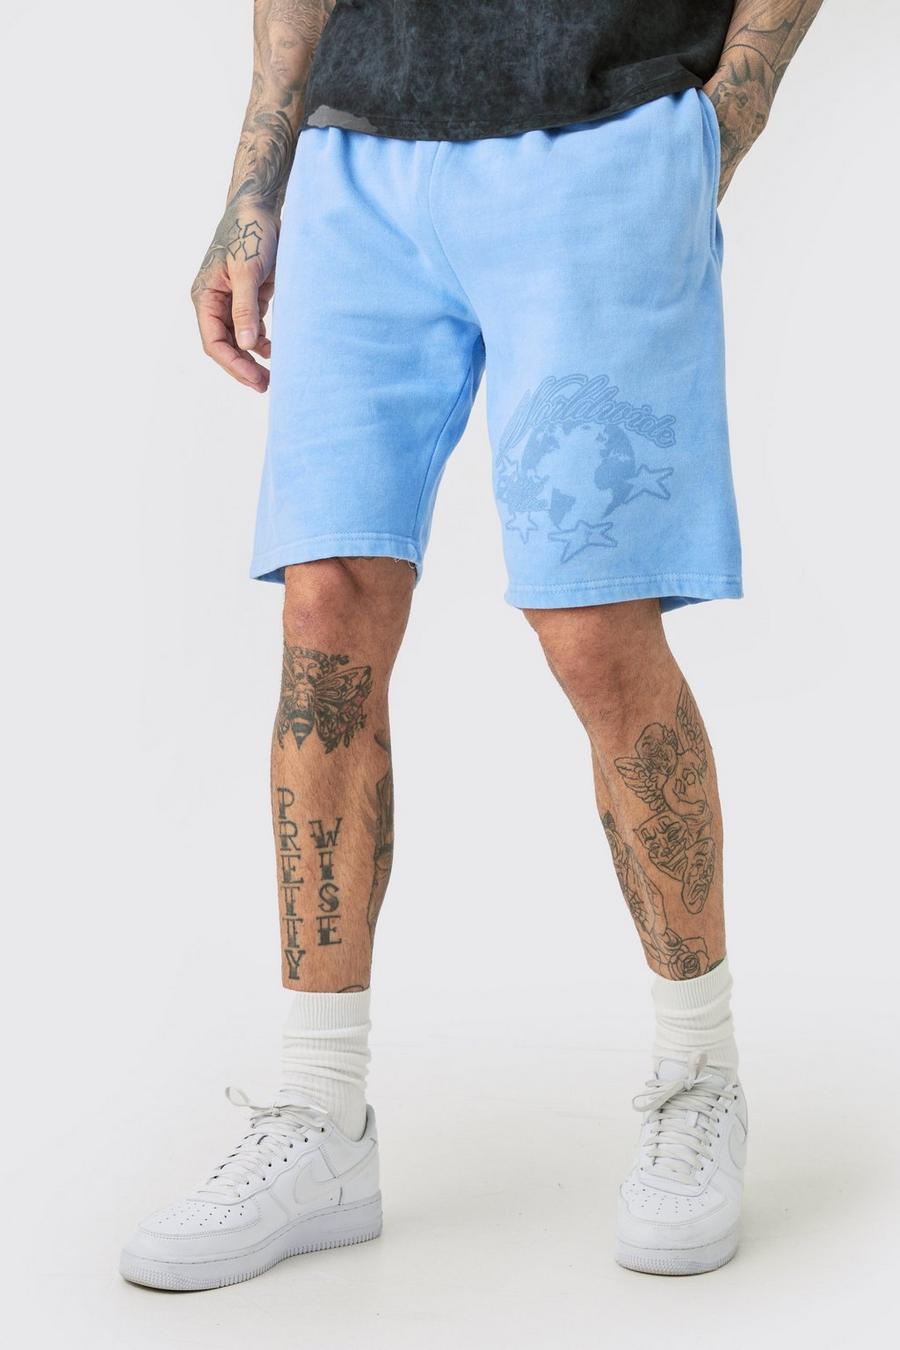 Pantalones cortos Tall oversize azules con estampado Dream Worldwide, Blue image number 1